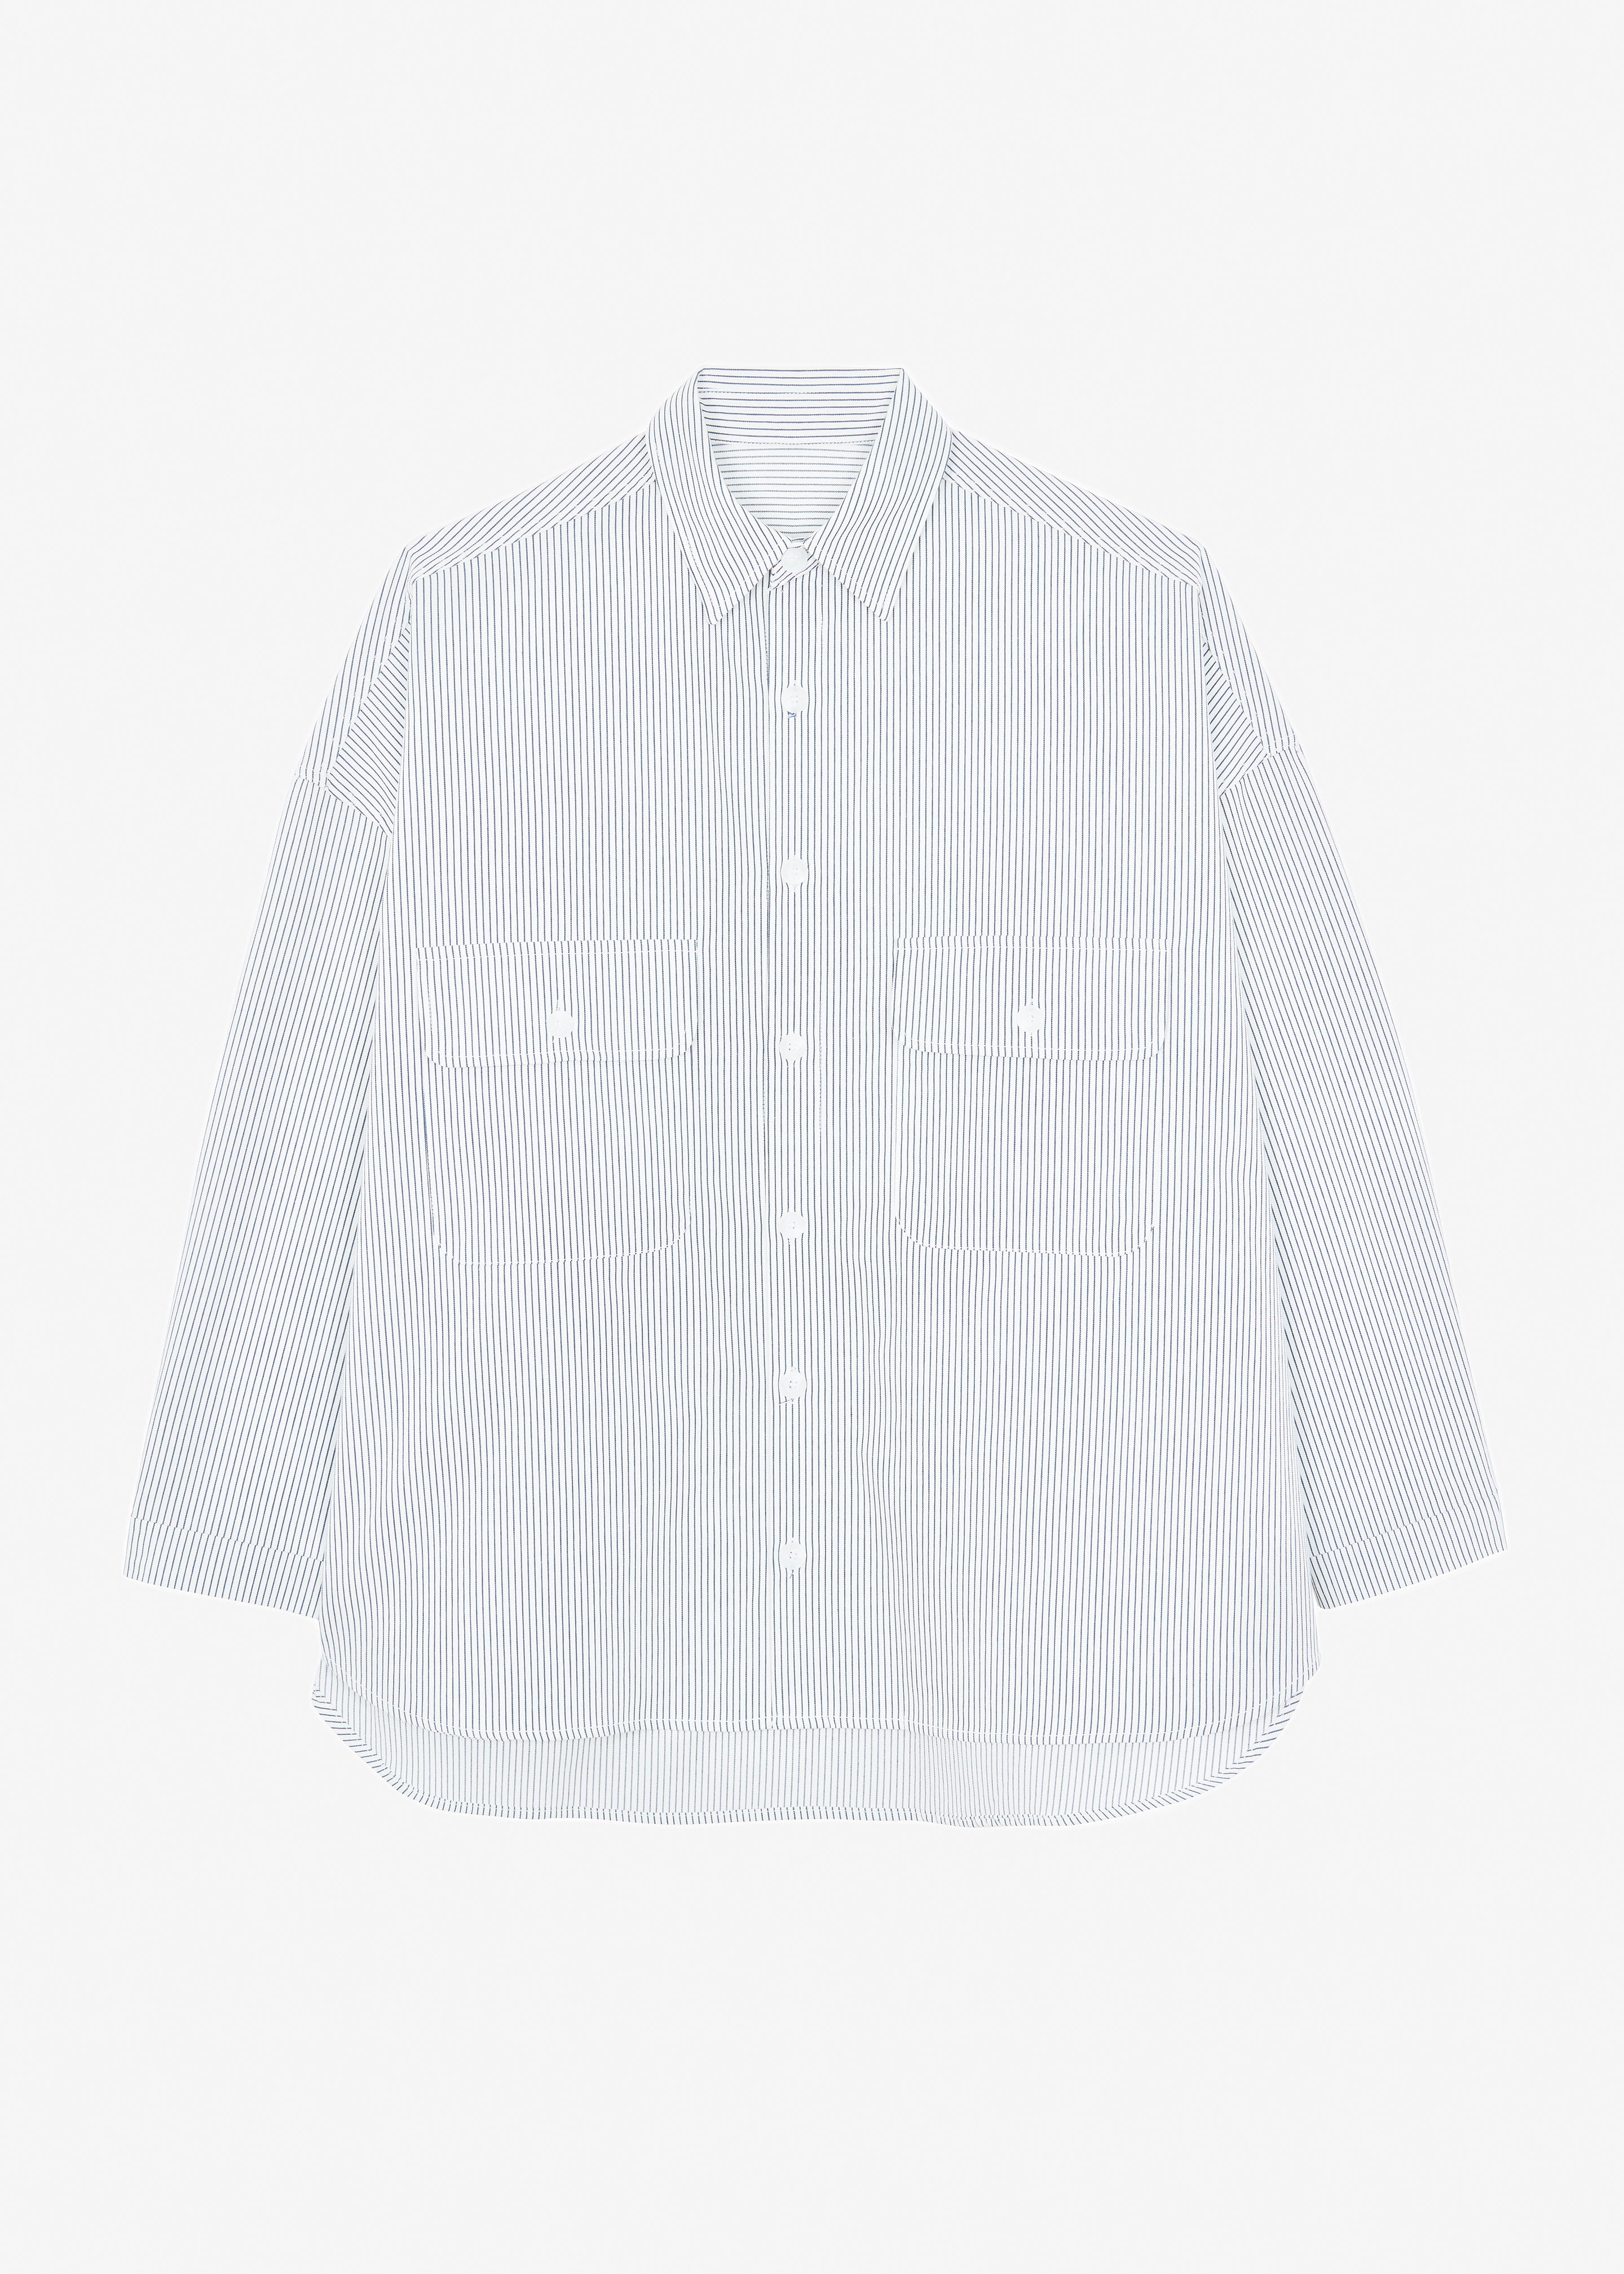 Kaline White Pocket Shirt - Navy Stripe - 13